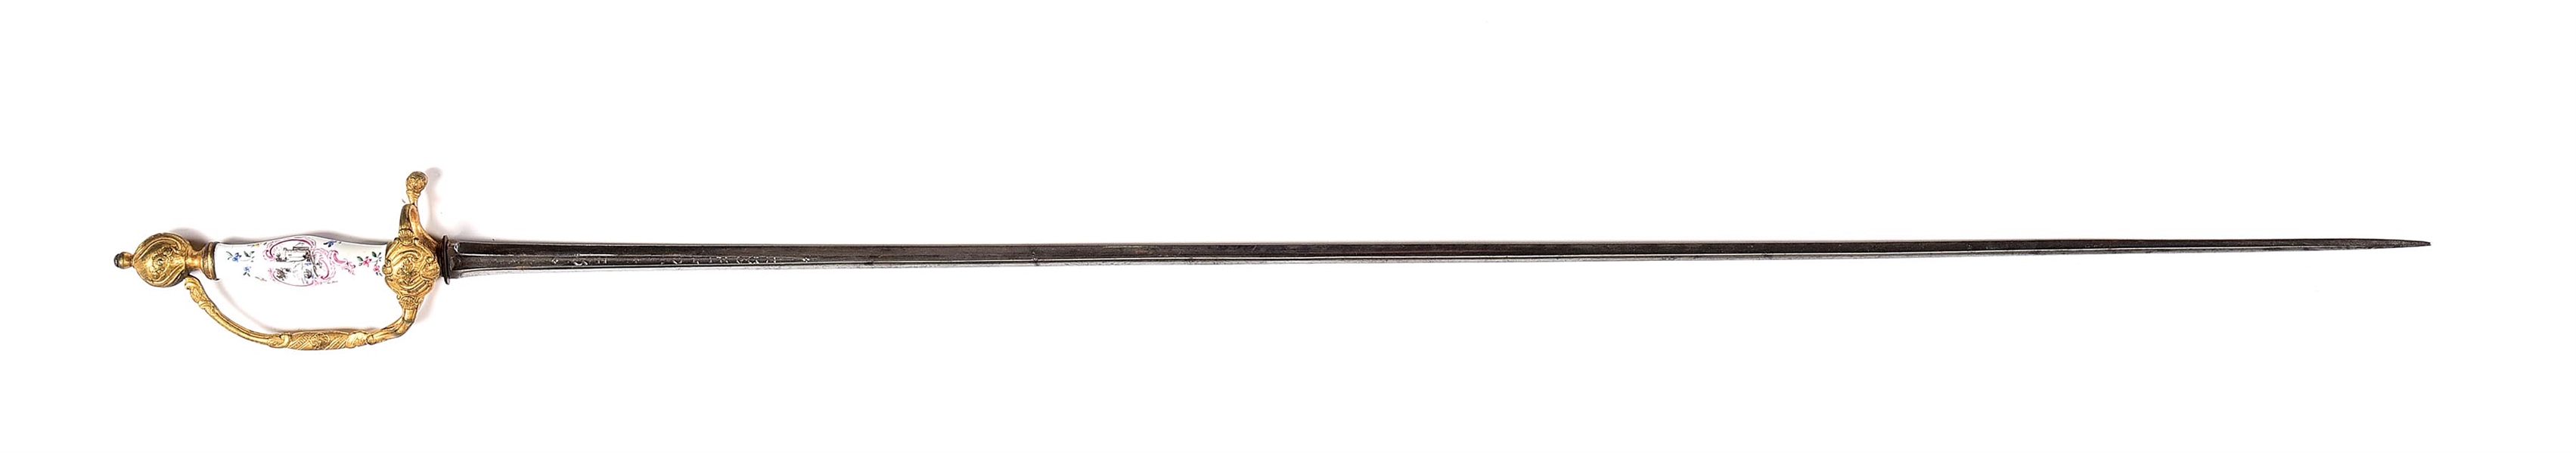 GERMAN PORCELAIN HANDLE SMALL SWORD.